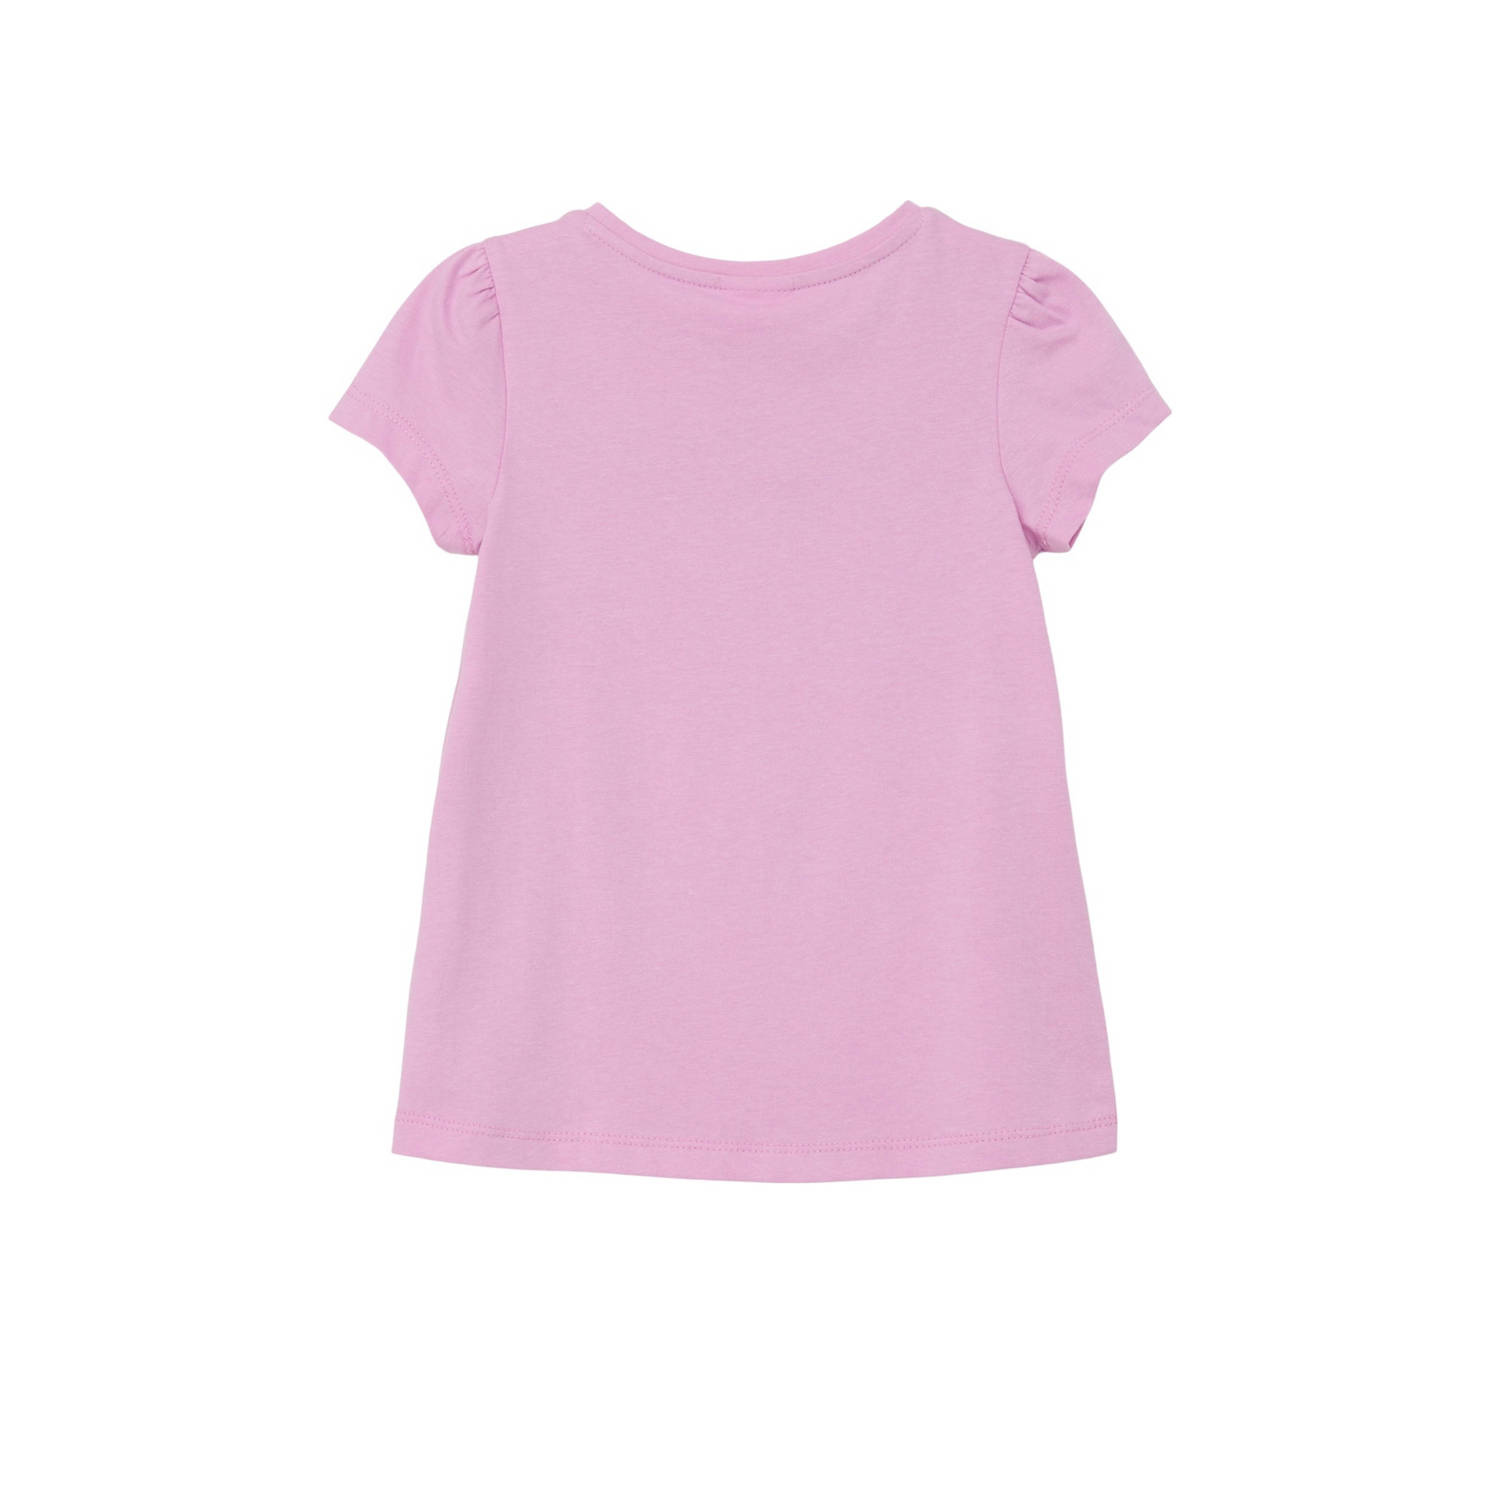 s.Oliver T-shirt met printopdruk roze